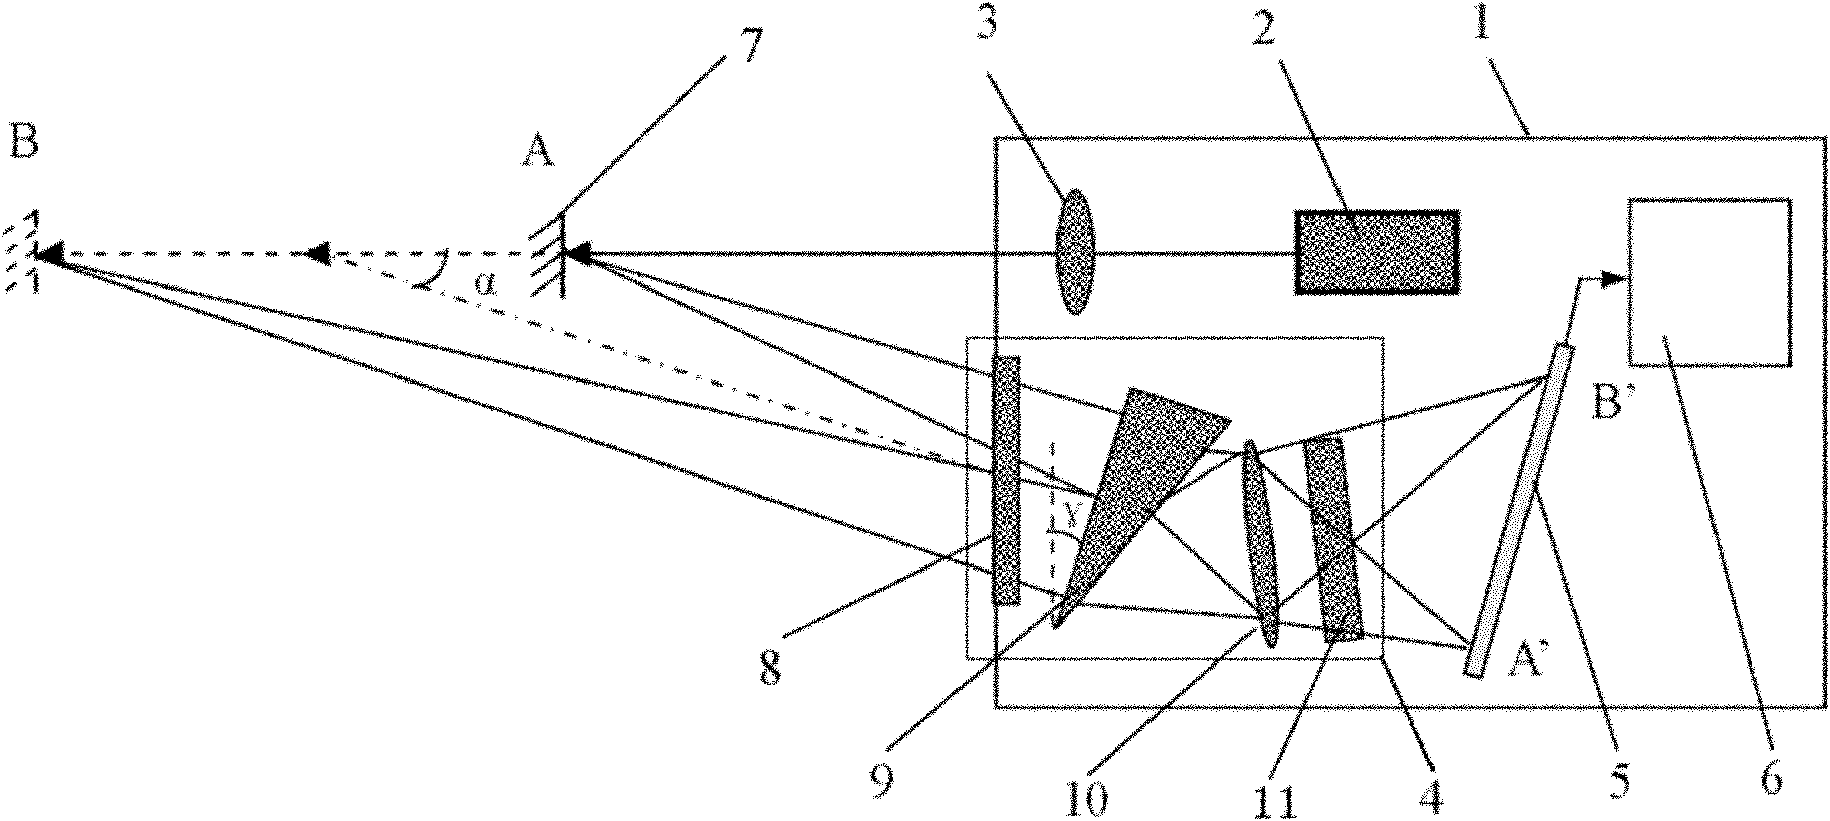 Laser triangulation sensor